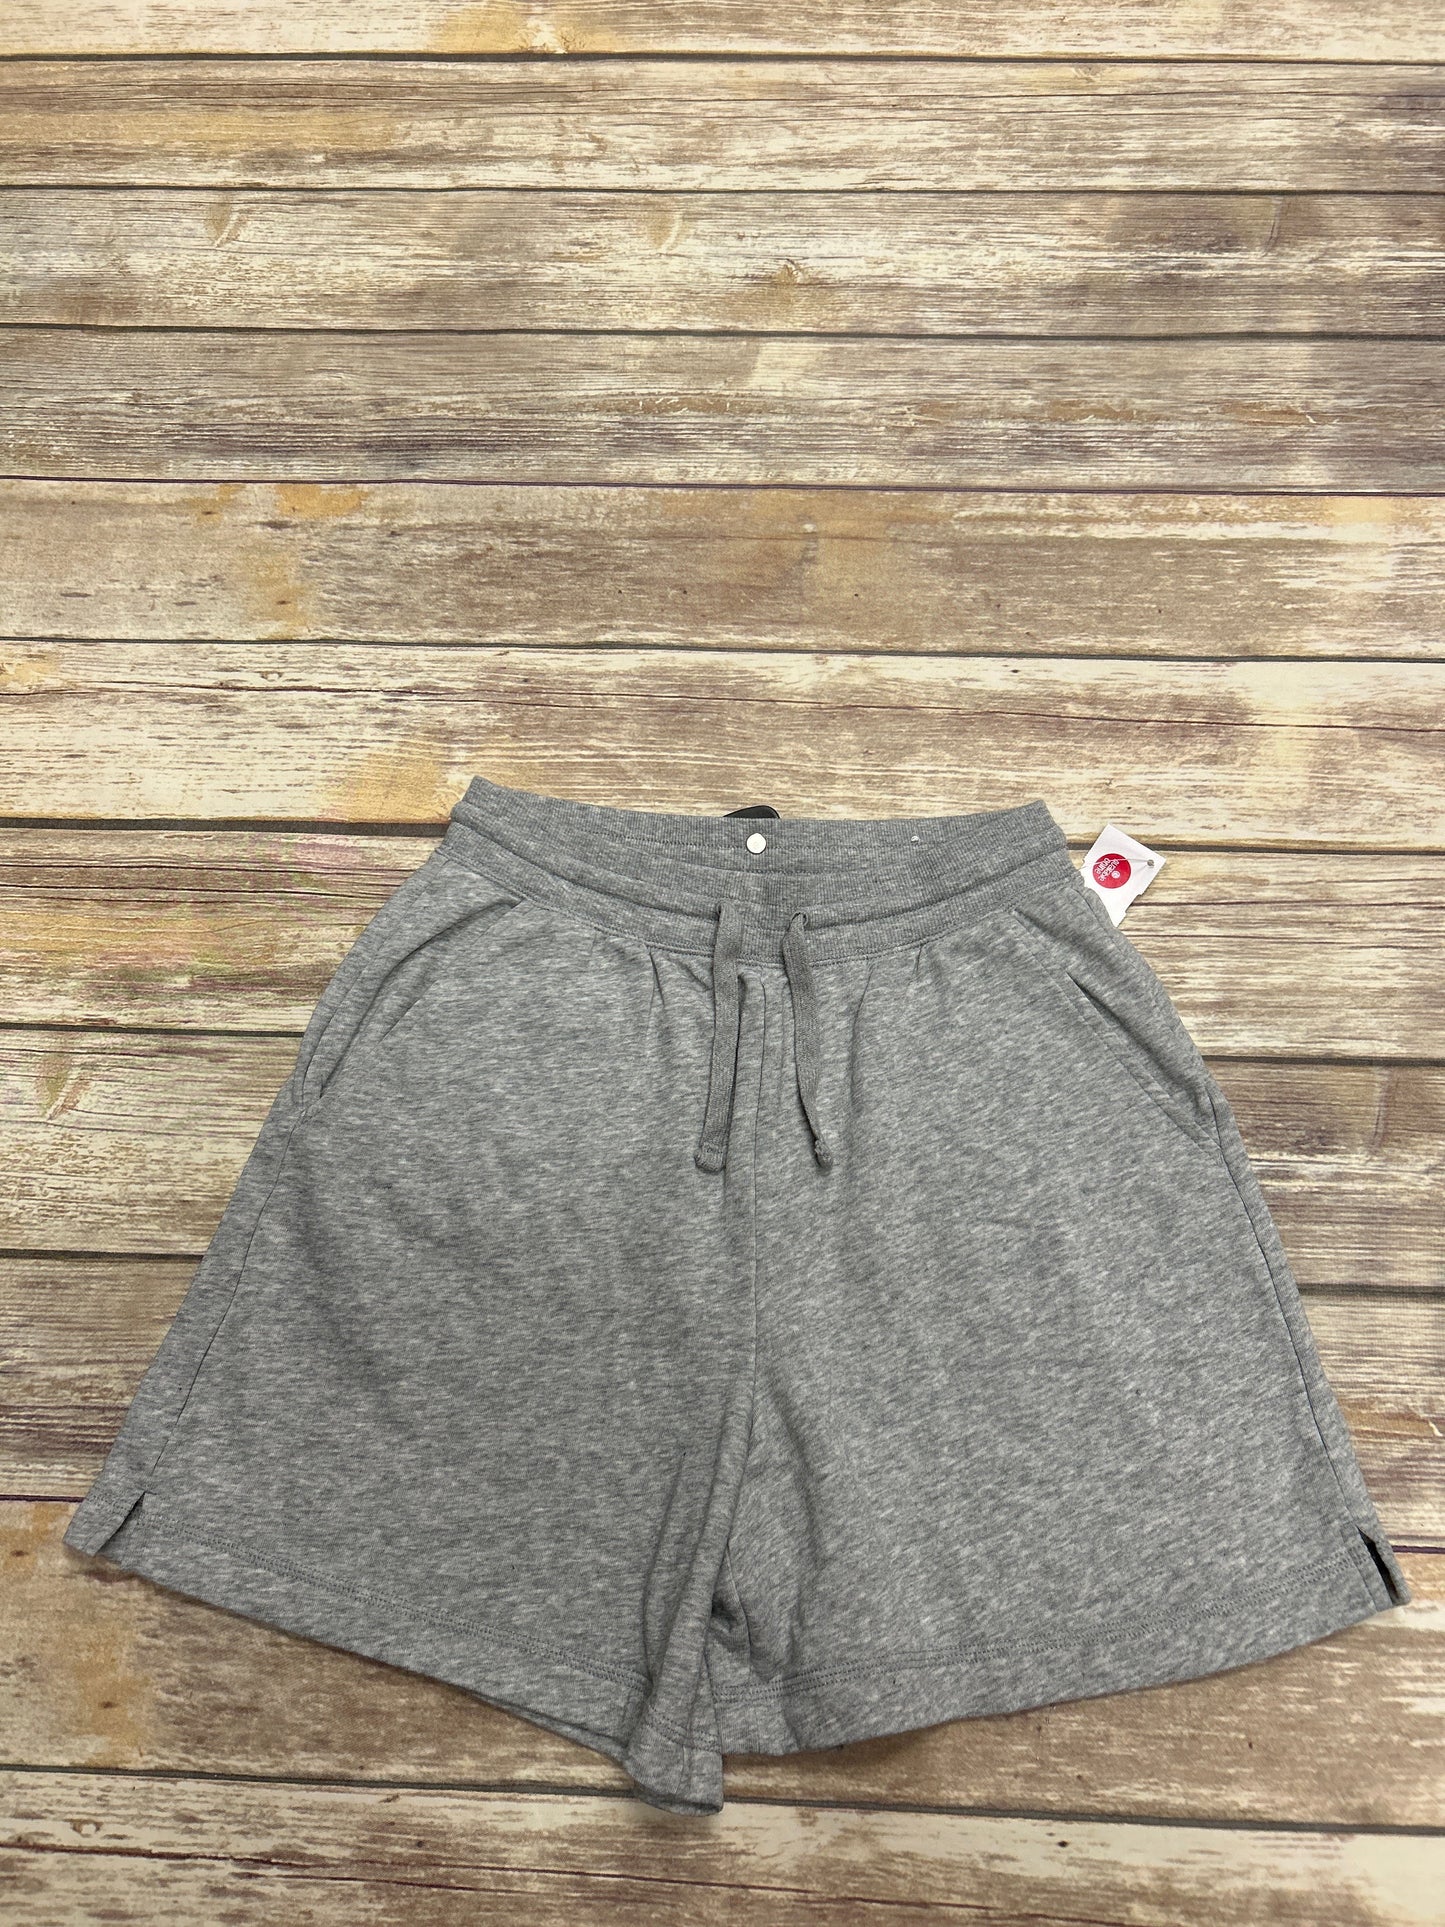 Grey Shorts Old Navy, Size S